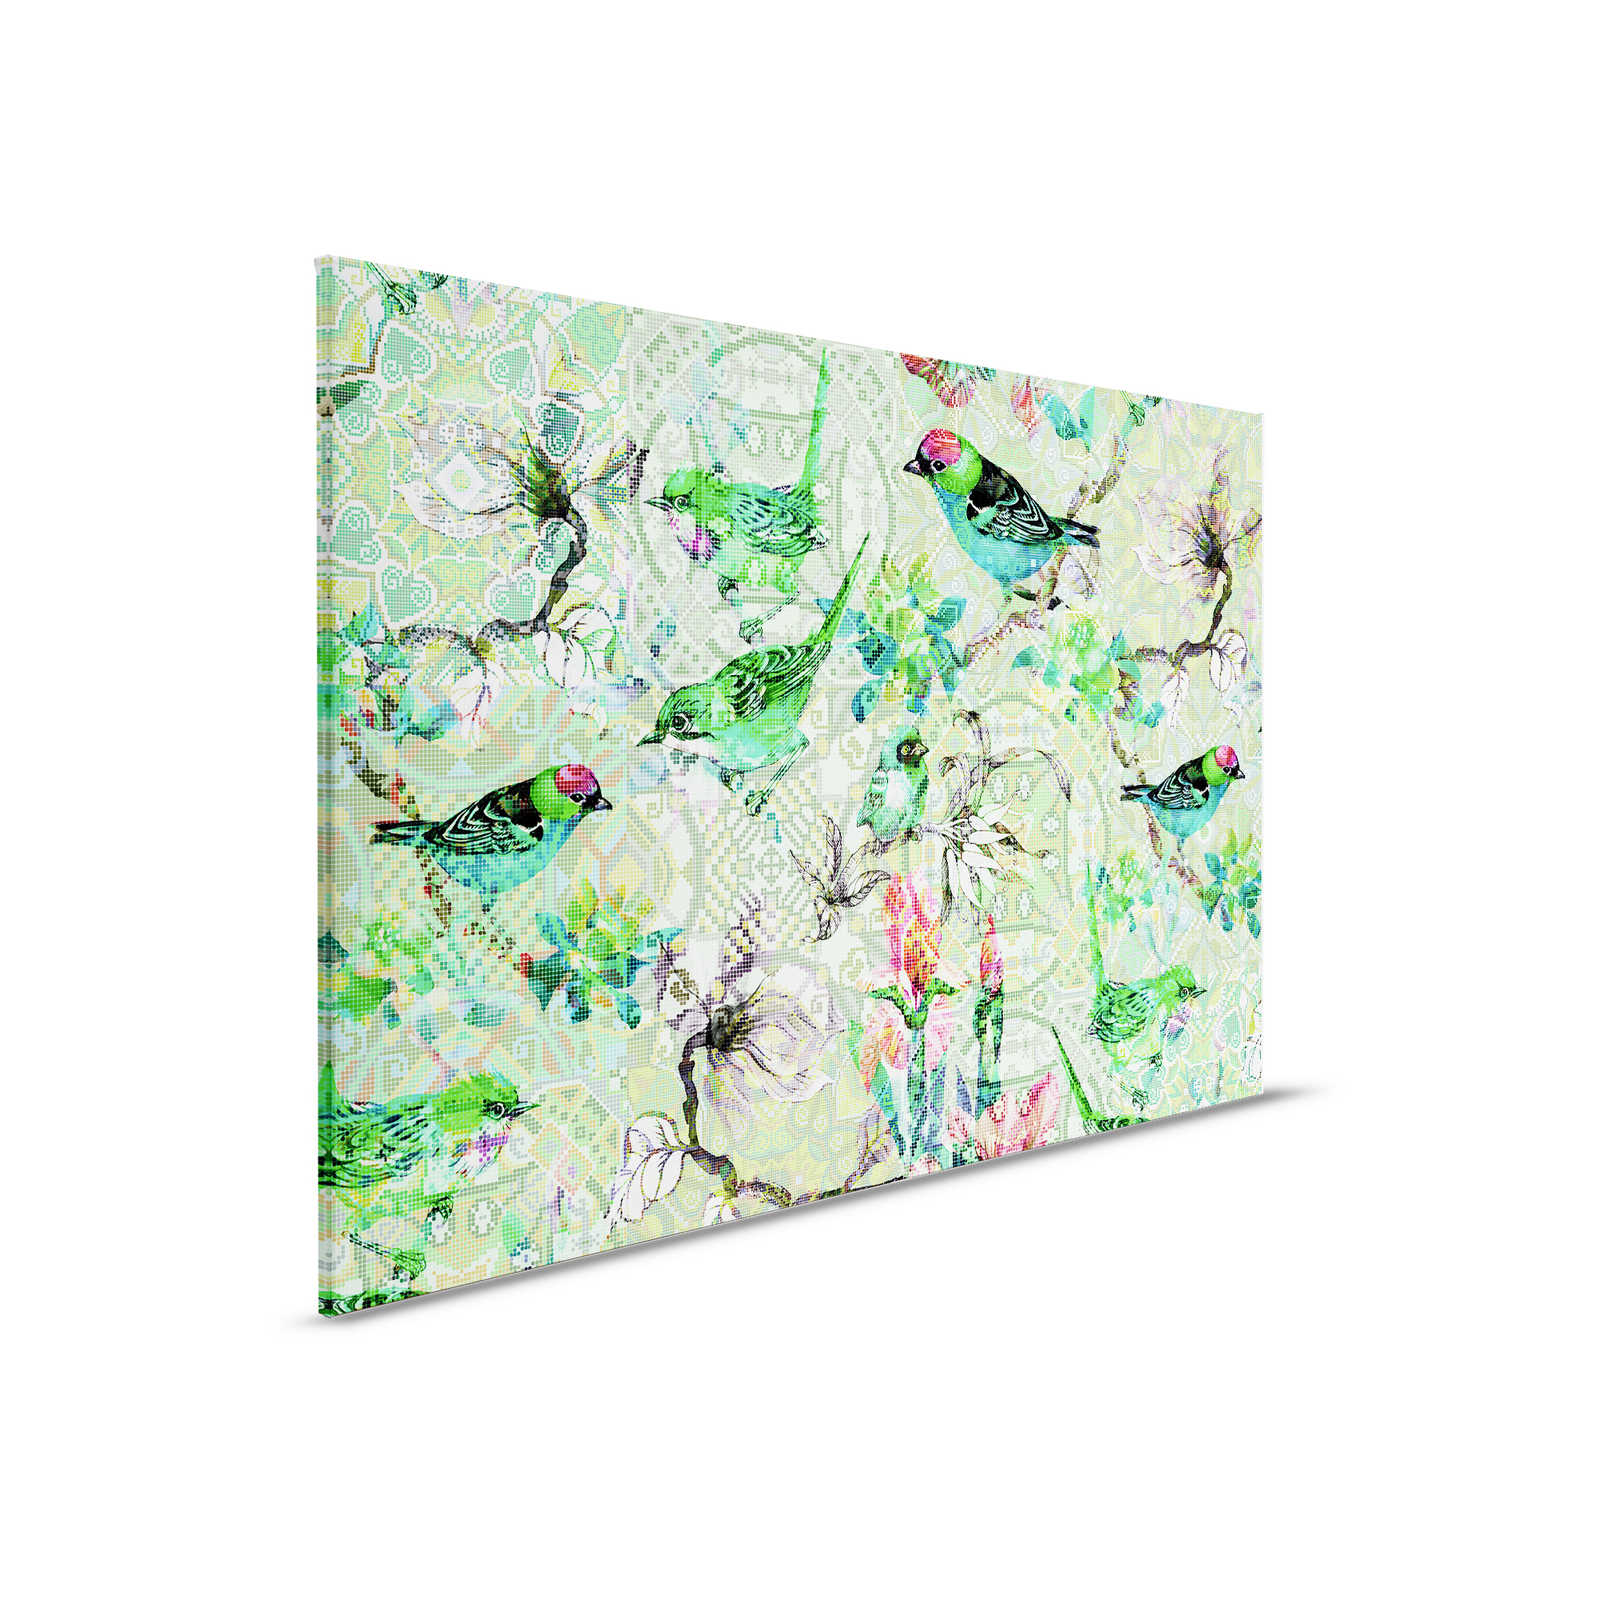 Vogel Leinwandbild Grün mit Mosaik Muster – 0,90 m x 0,60 m
